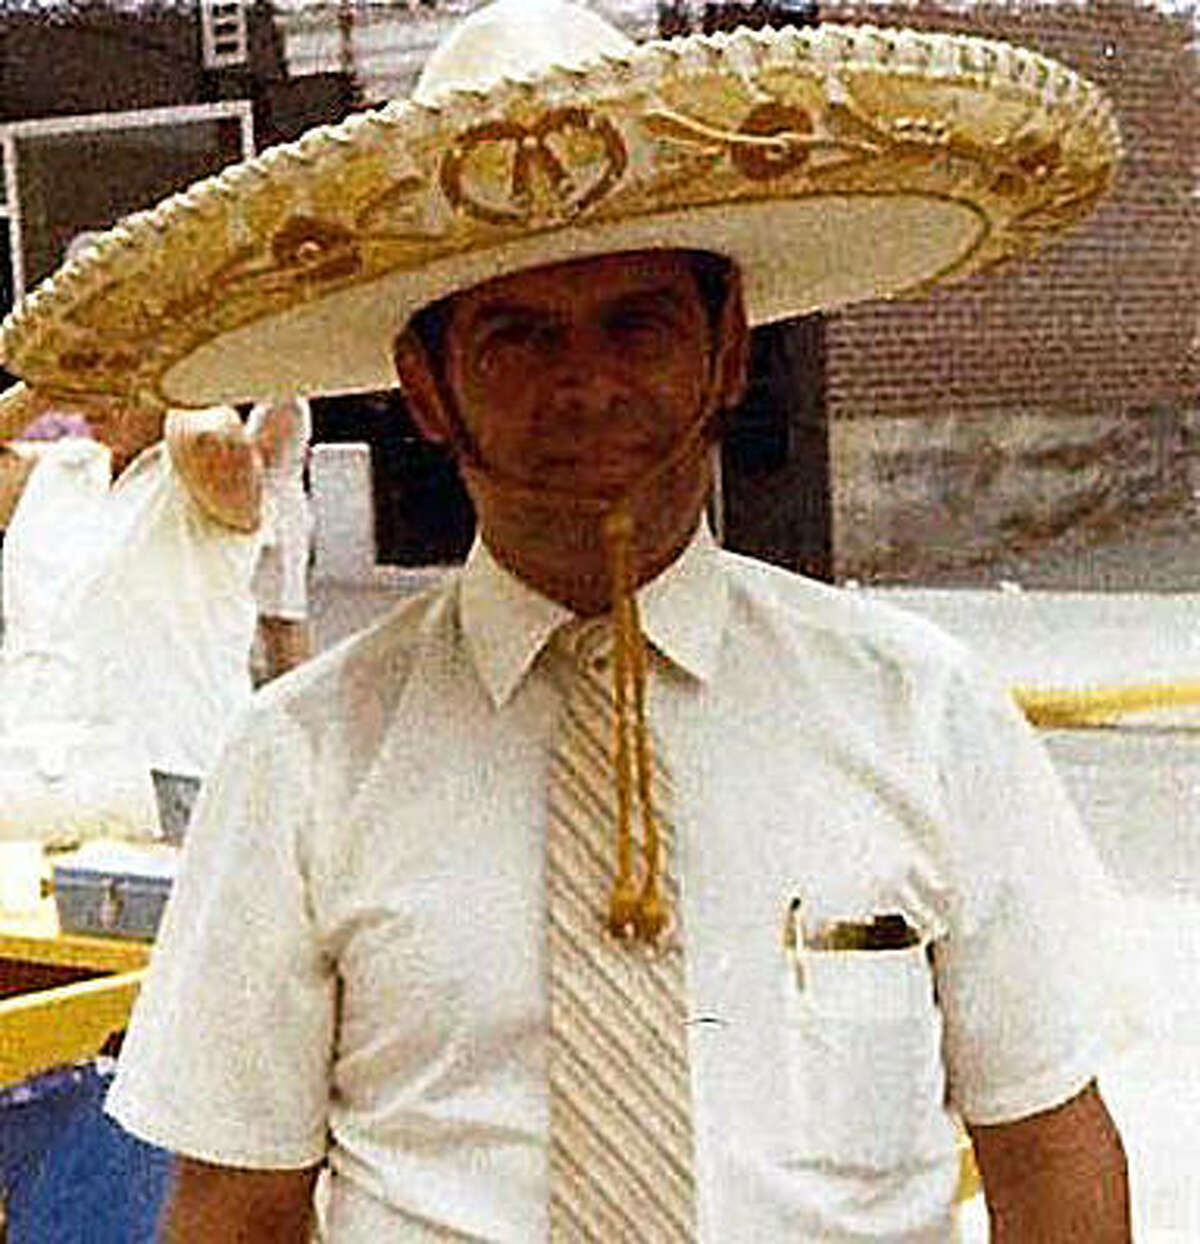 The late Raymundo “Ramon” Otero founded Ramon’s El Dorado in Collinsville more than 50 years ago.